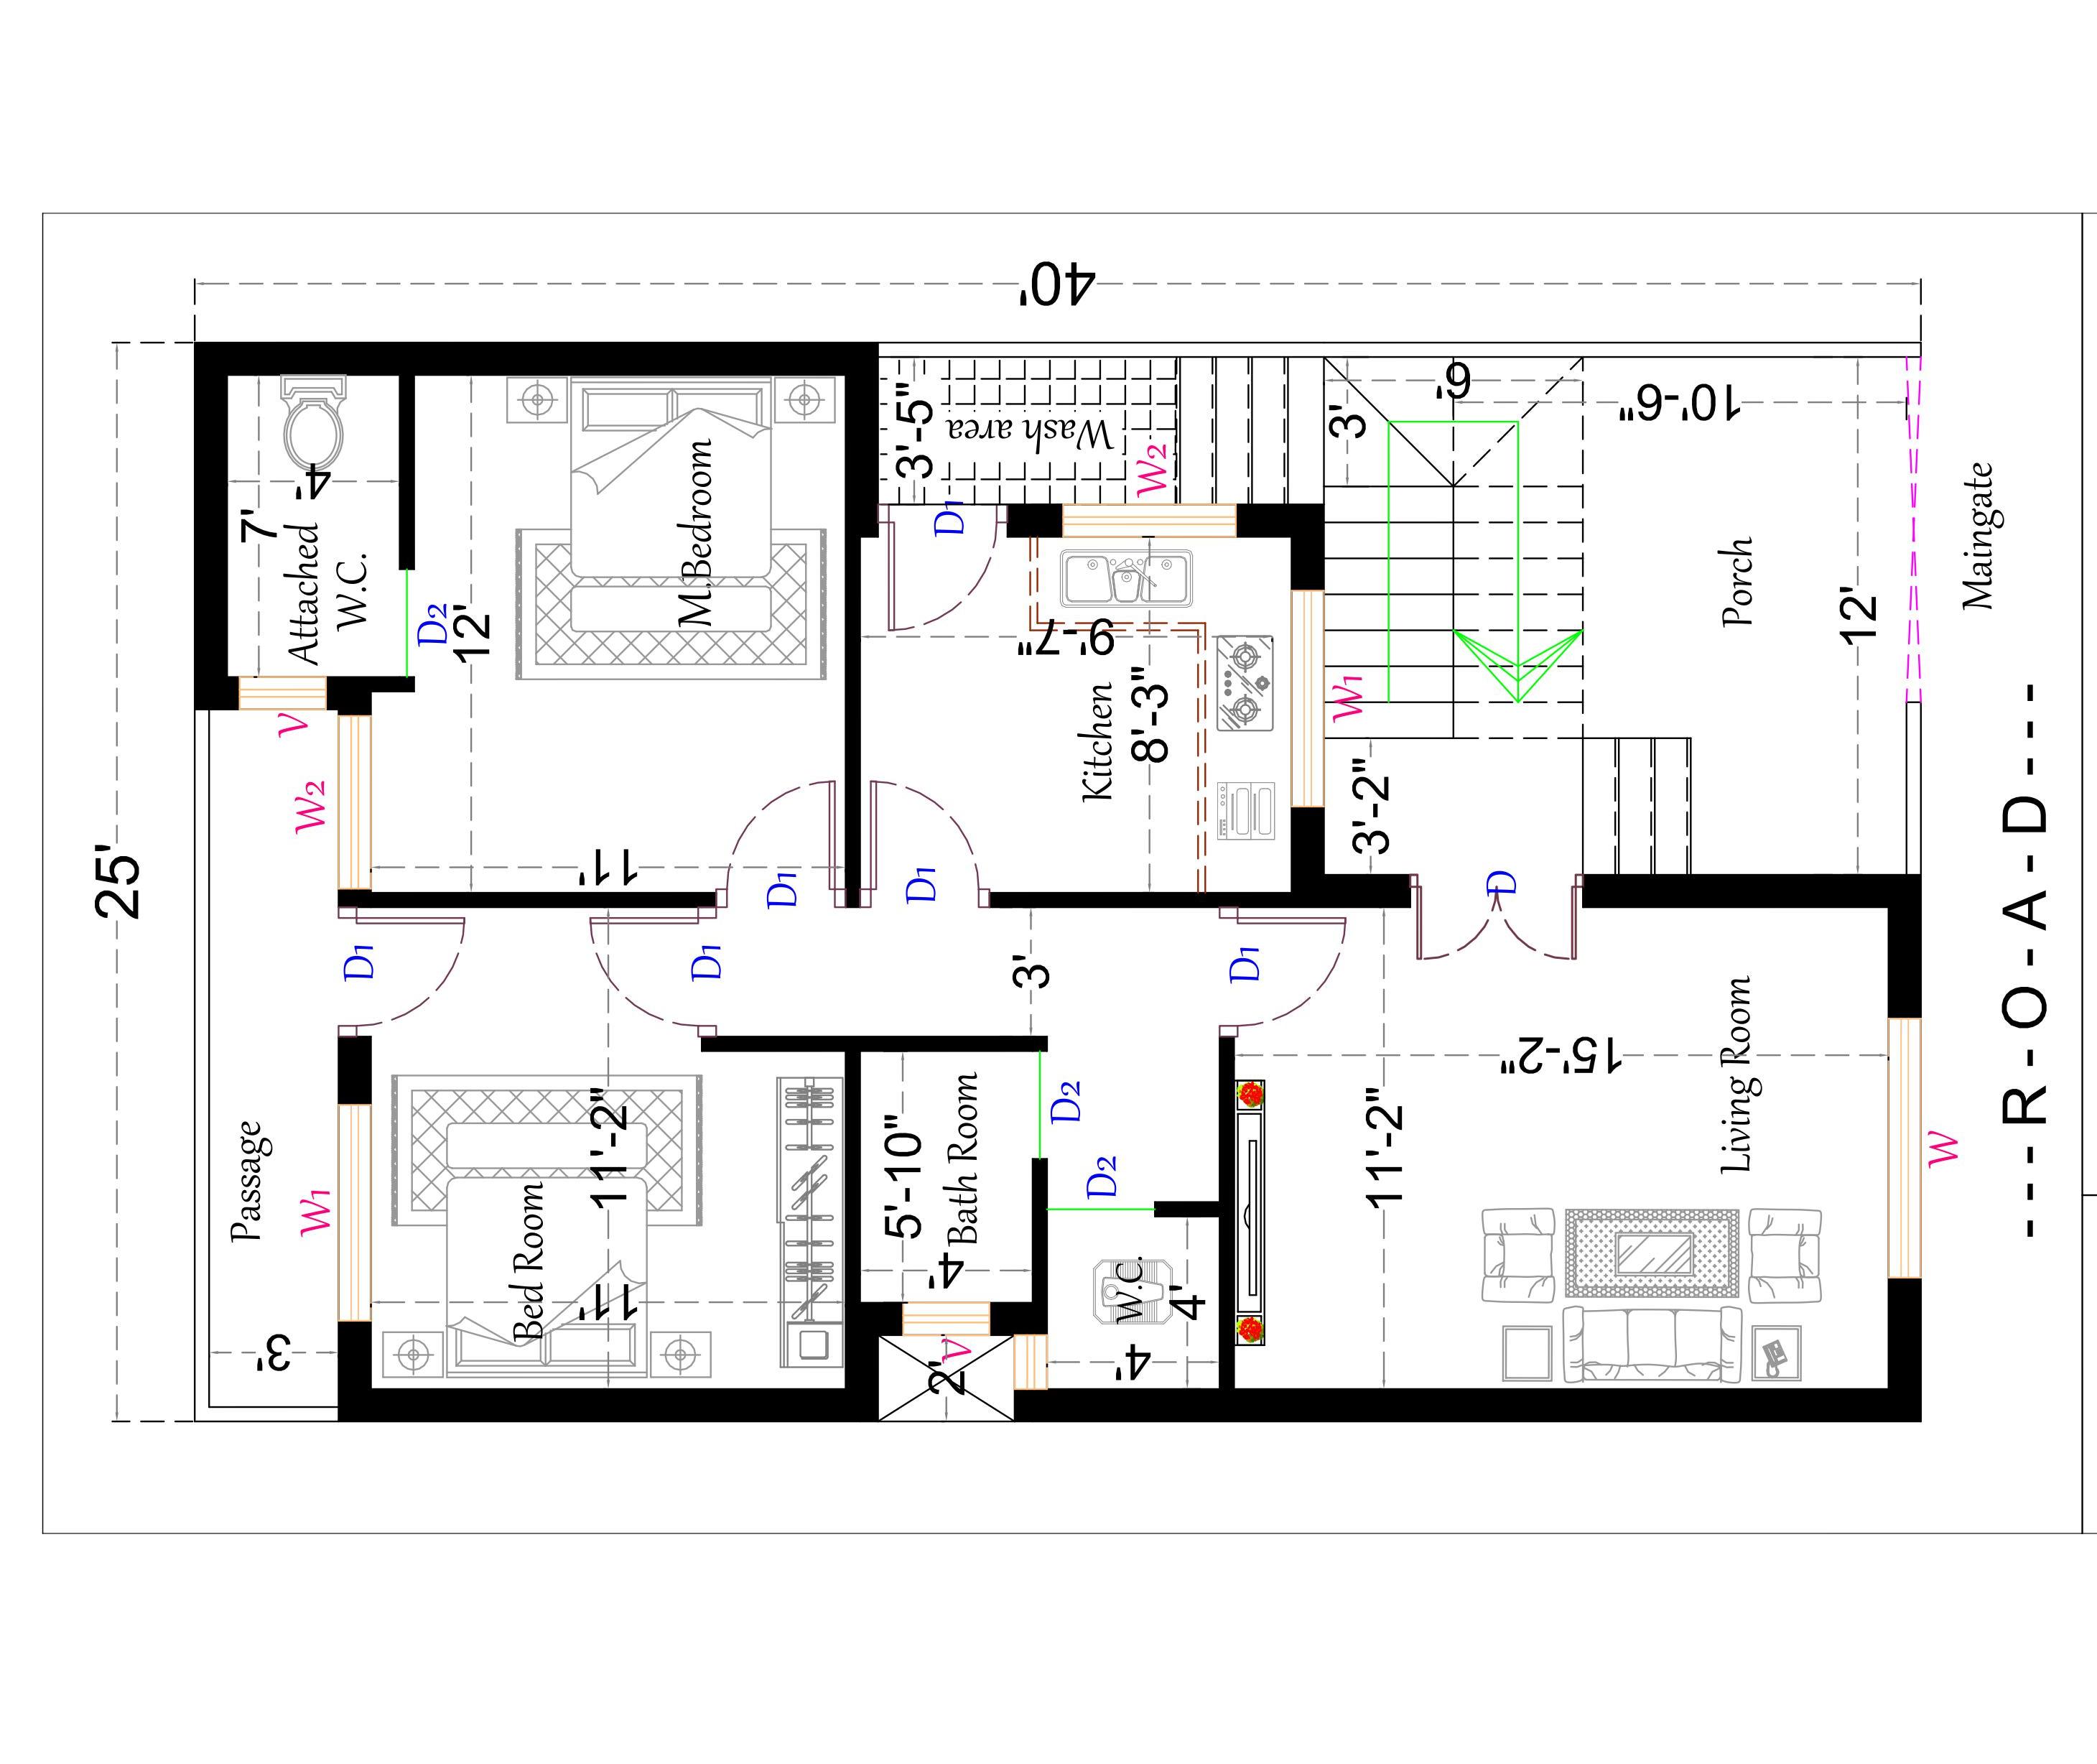 House Floor Plan Online - BEST HOME DESIGN IDEAS